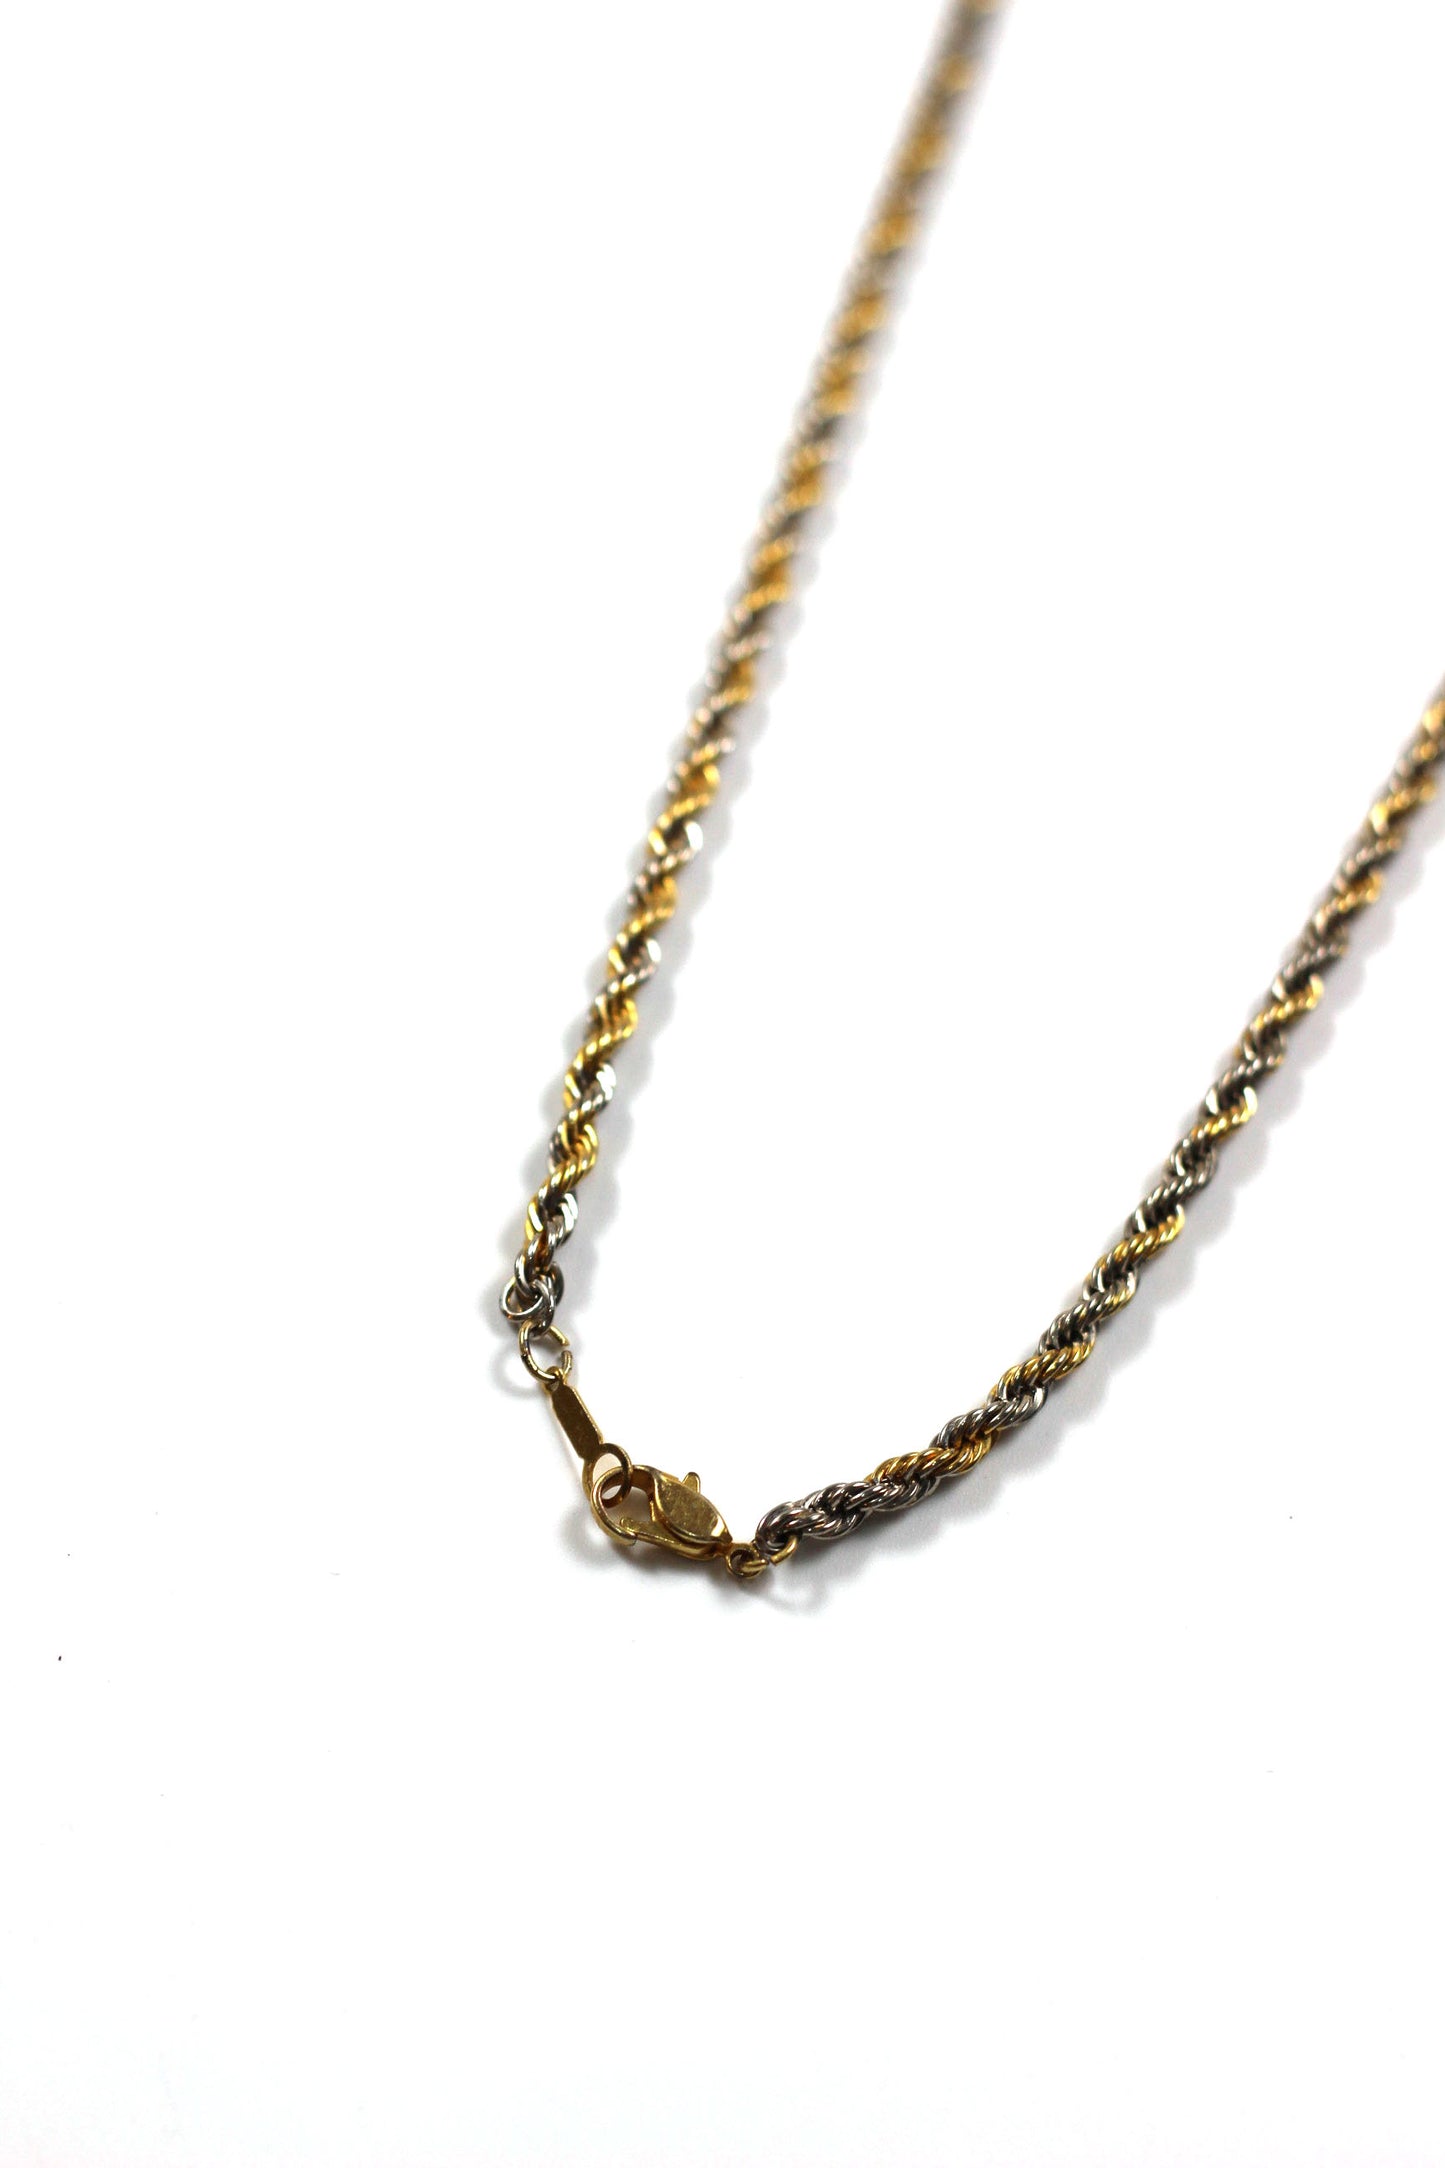 Vintage gold x silver necklace 華やかなゴールドと上品なシルバーの融合